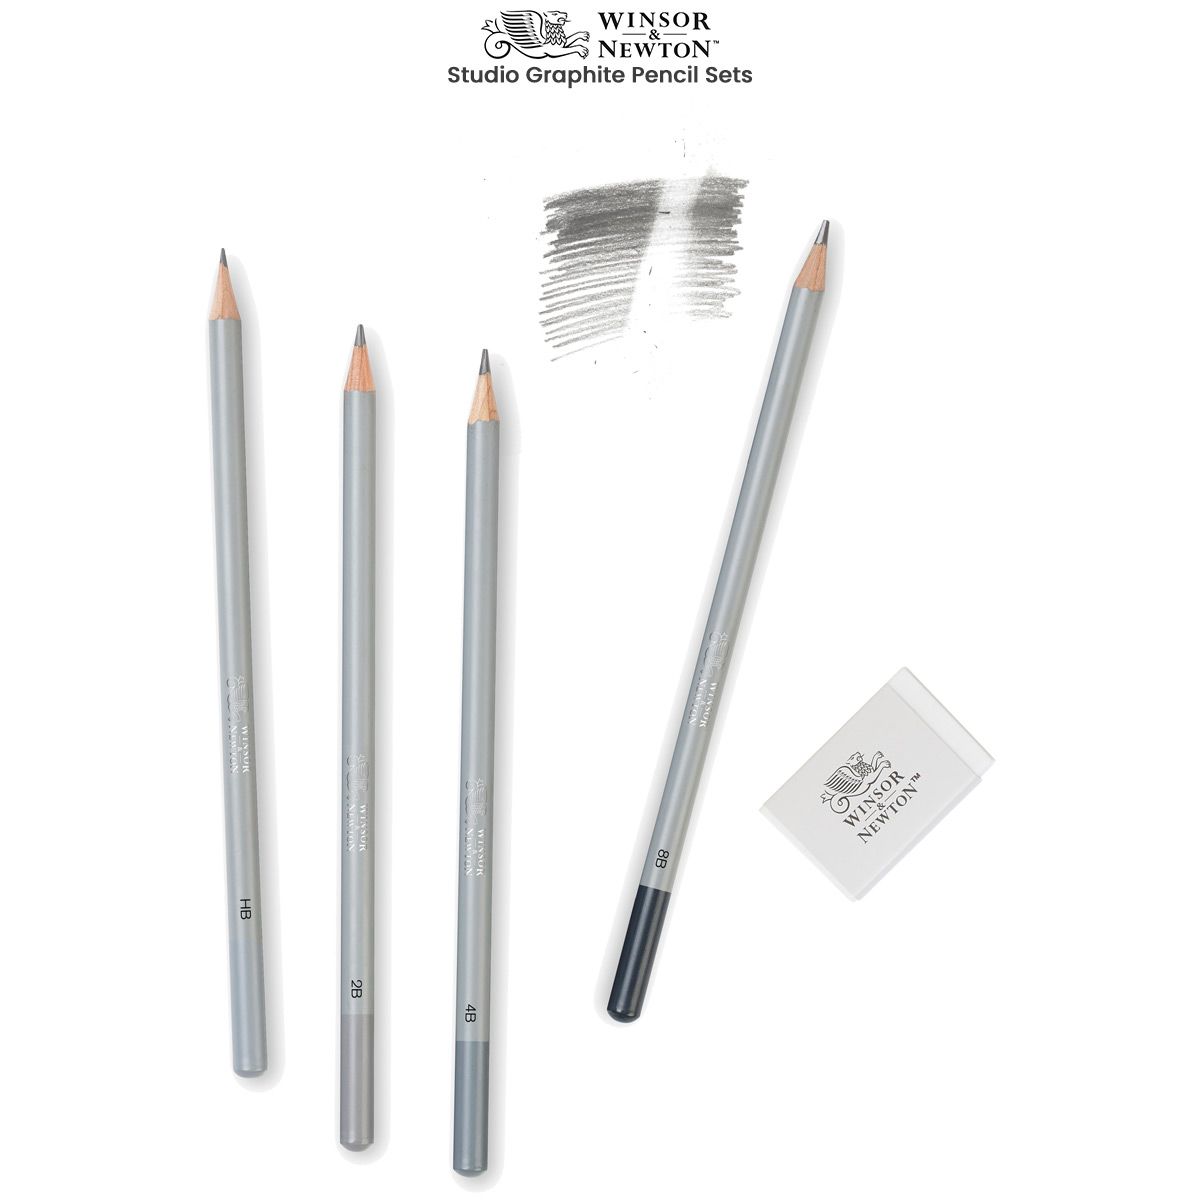 Winsor & Newton Studio Collection Graphite Pencil - Set of 5 (Soft)